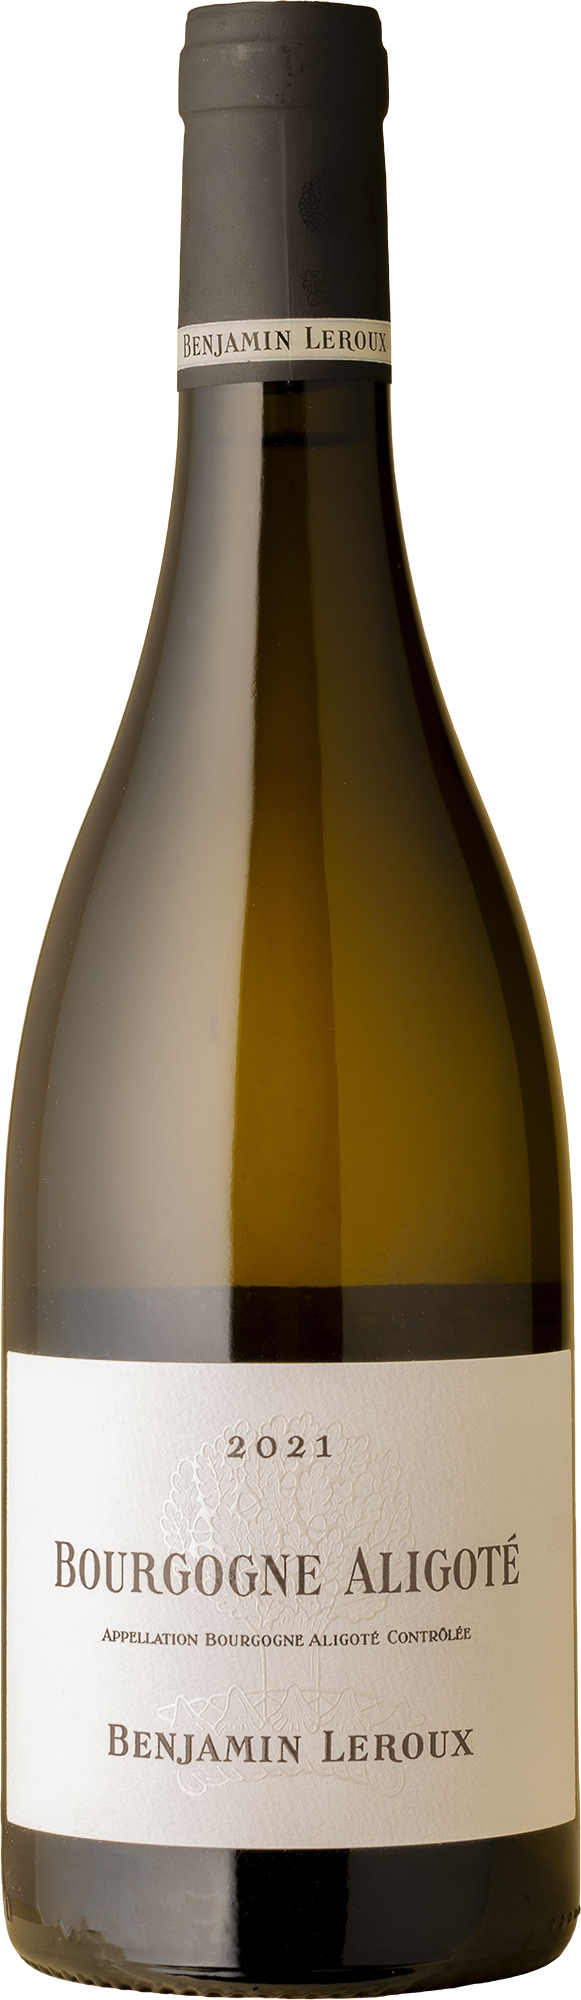 Benjamin Leroux - Bourgogne Aligoté 2021 White Wine